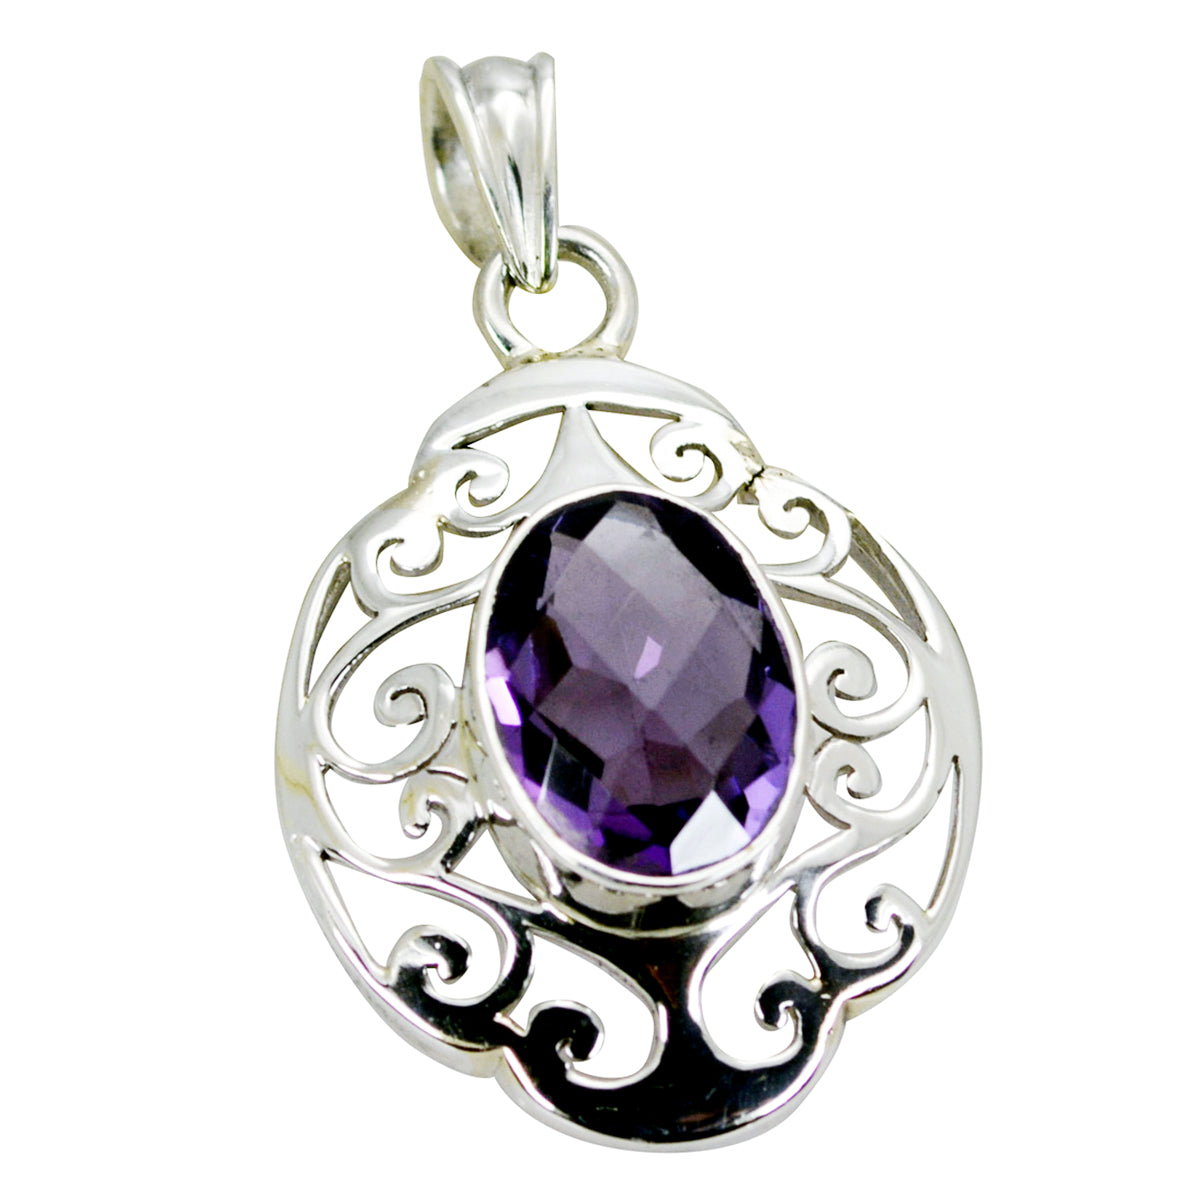 Riyo Nice Gemstone Oval checker Purple Amethyst Sterling Silver Pendant gift for friendship day